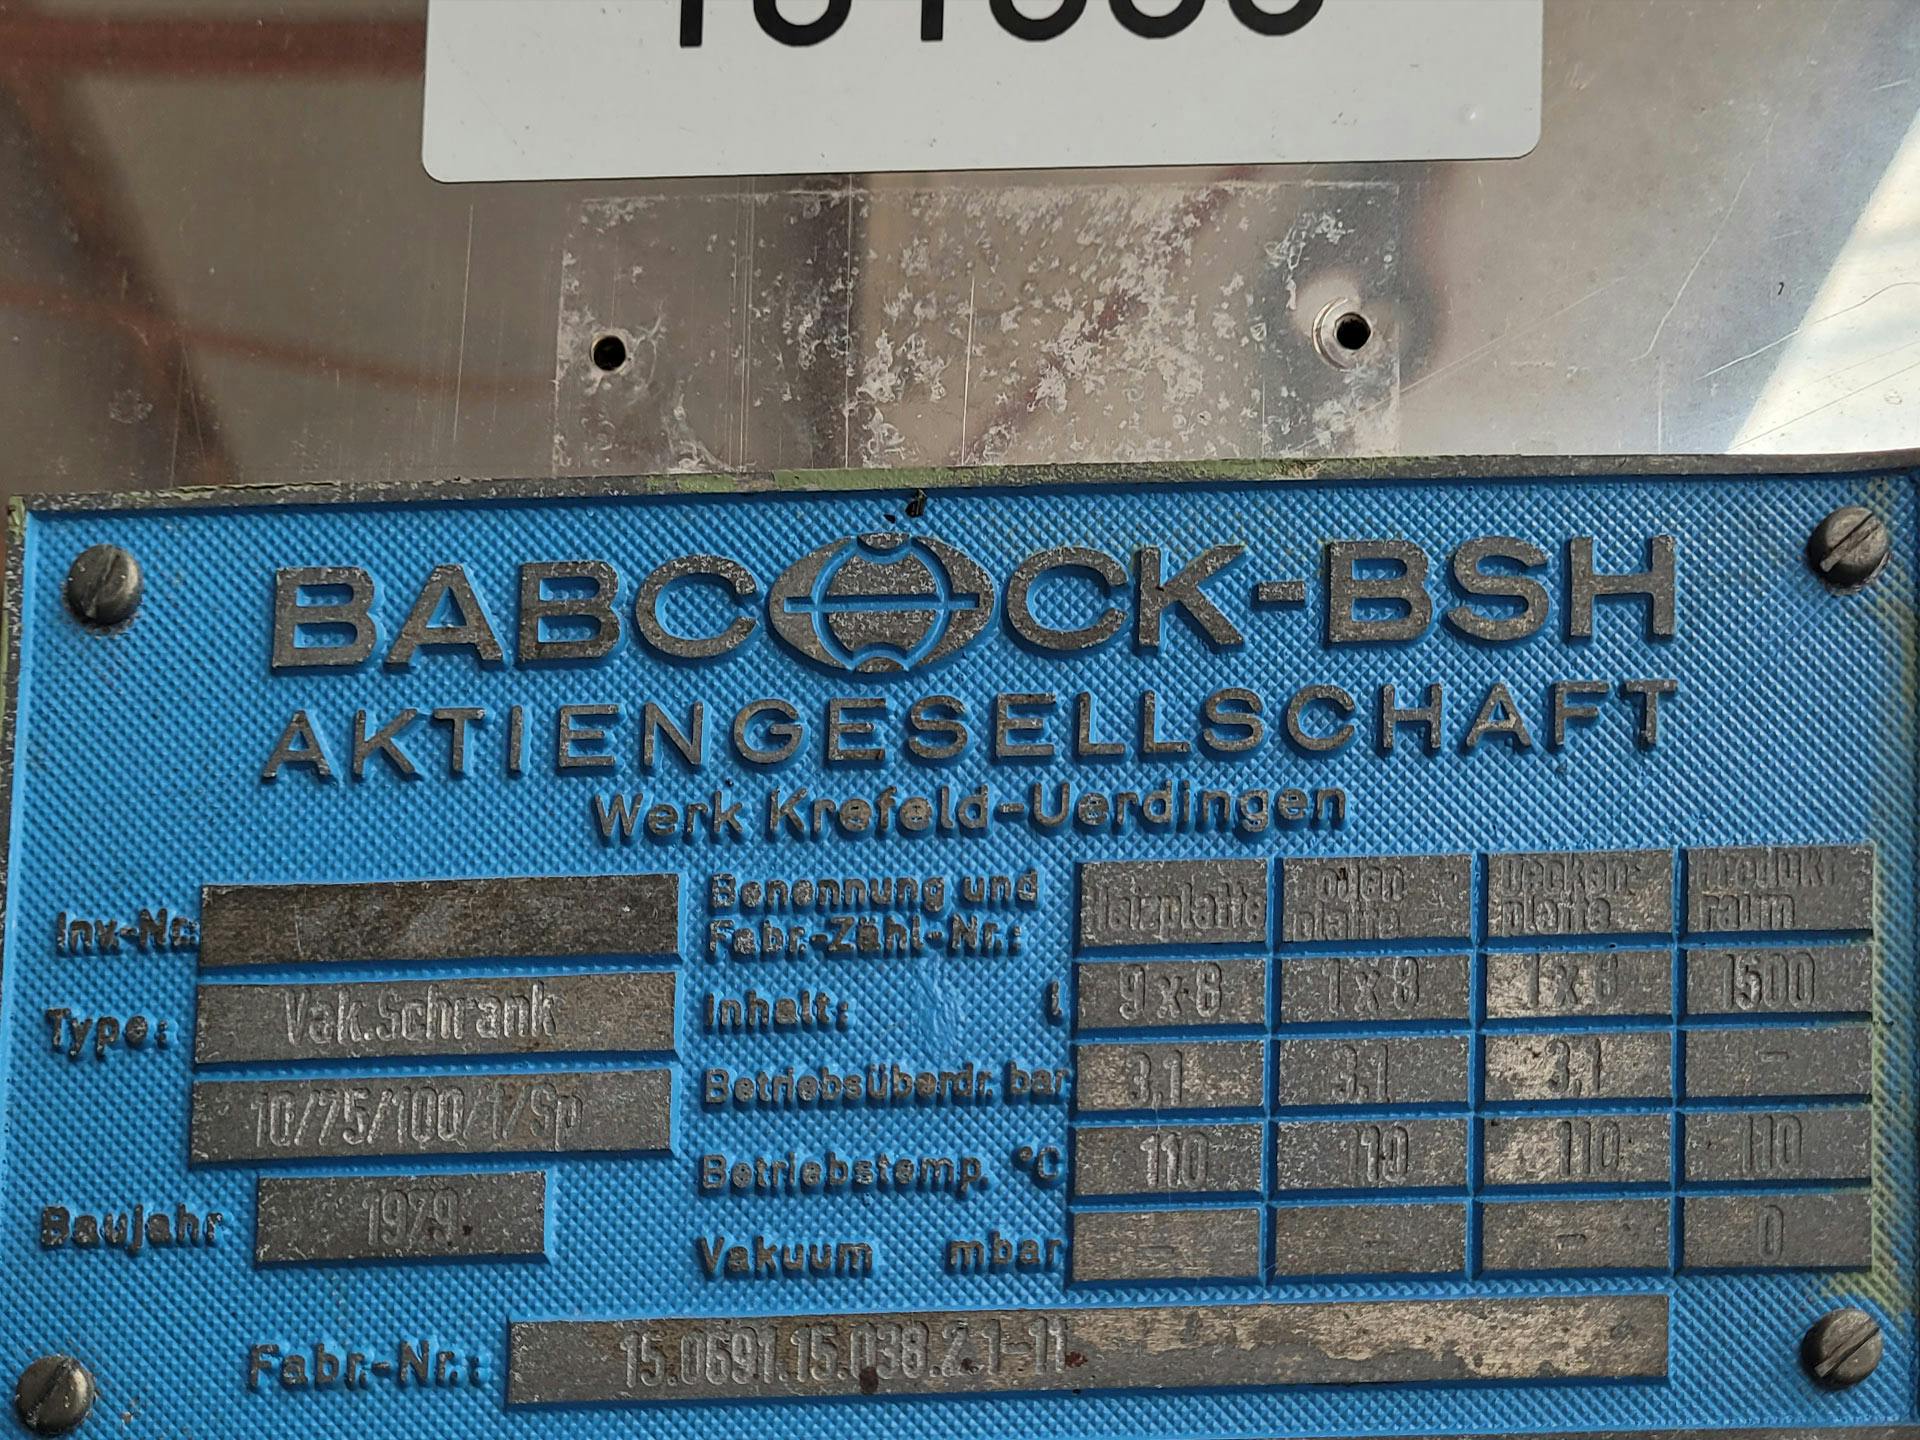 Babcock-BSH 10/75/100/1/SP - Suszarka półkowa - image 5